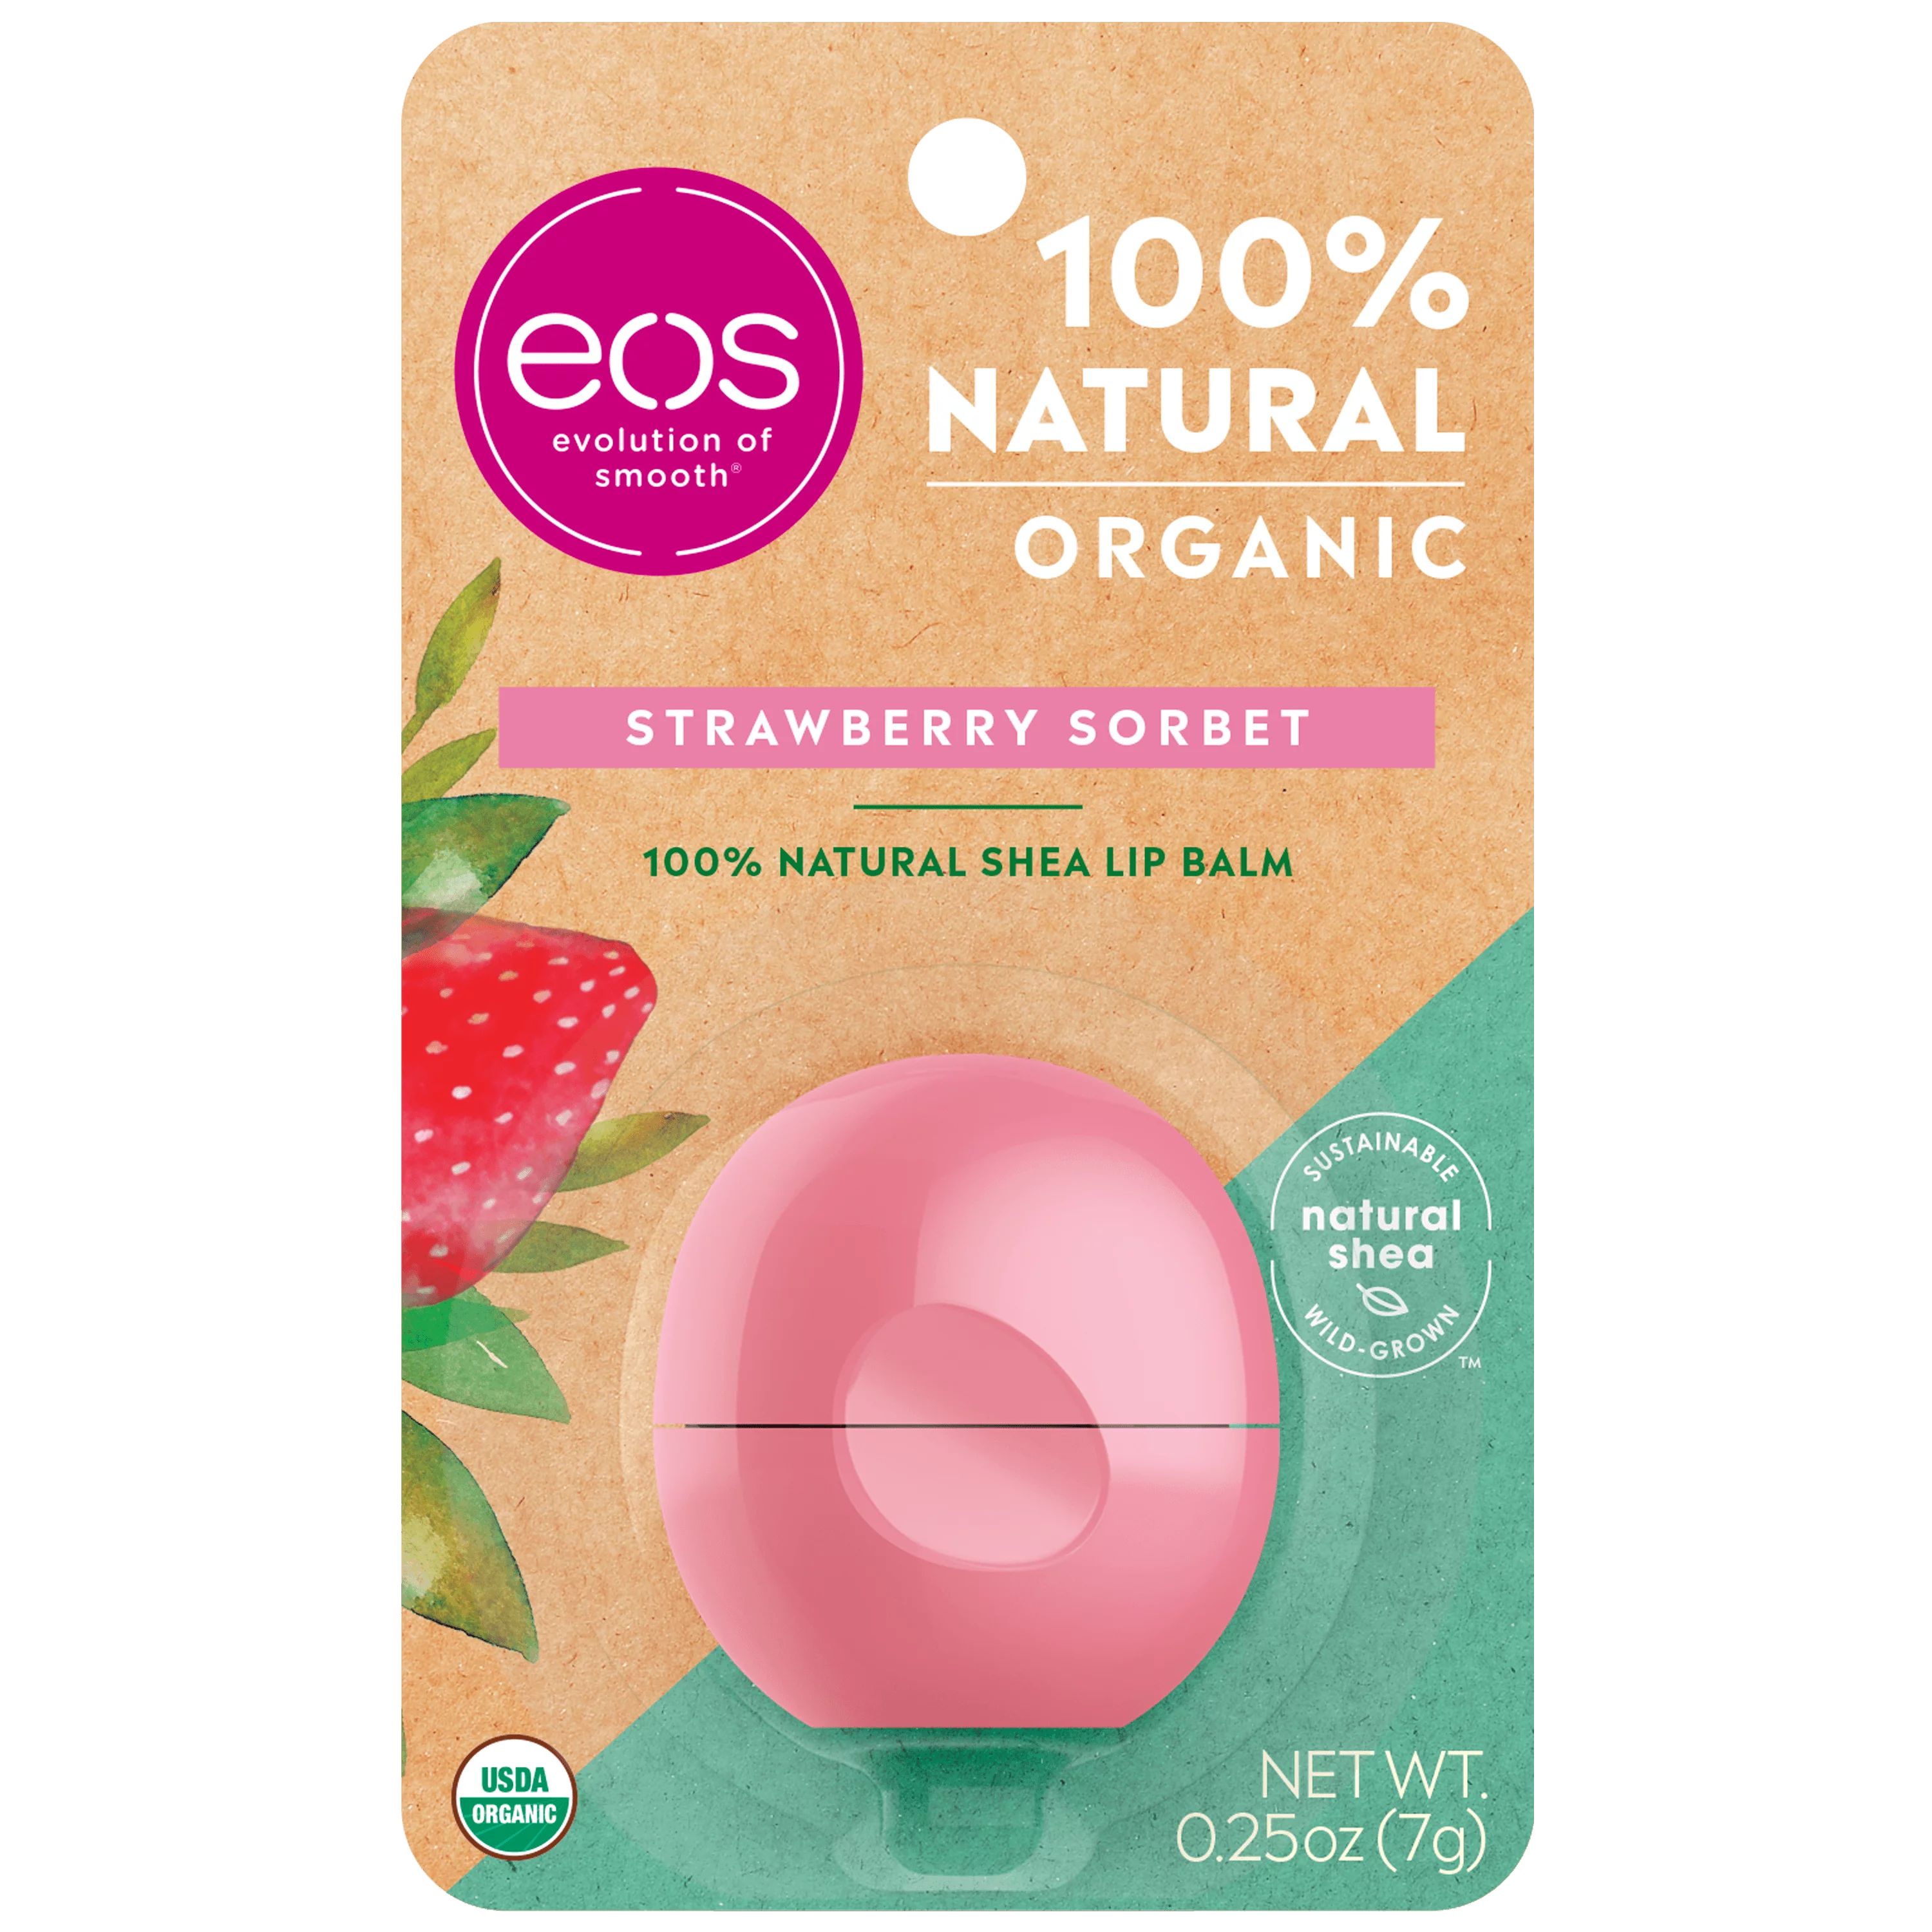 eos 100% Natural & Organic Lip Balm Sphere - Strawberry Sorbet , Moisuturzing Shea Butter for Cha... | Walmart (US)